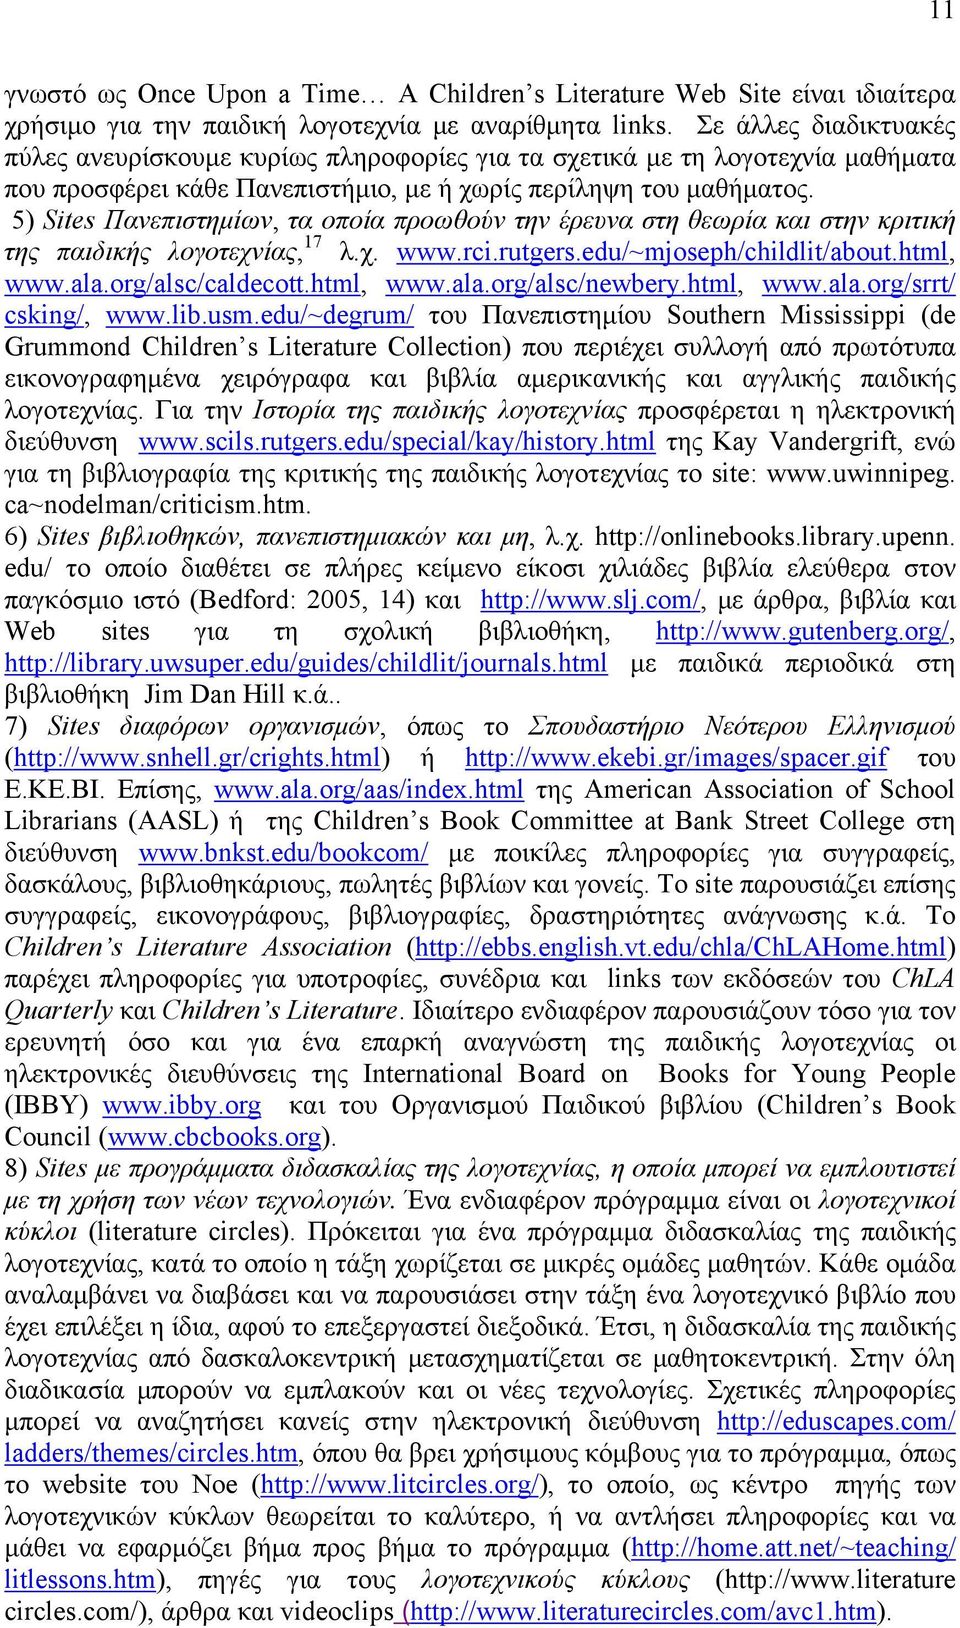 5) Sites Πανεπιστημίων, τα οποία προωθούν την έρευνα στη θεωρία και στην κριτική της παιδικής λογοτεχνίας, 17 λ.χ. www.rci.rutgers.edu/~mjoseph/childlit/about.html, www.ala.org/alsc/caldecott.